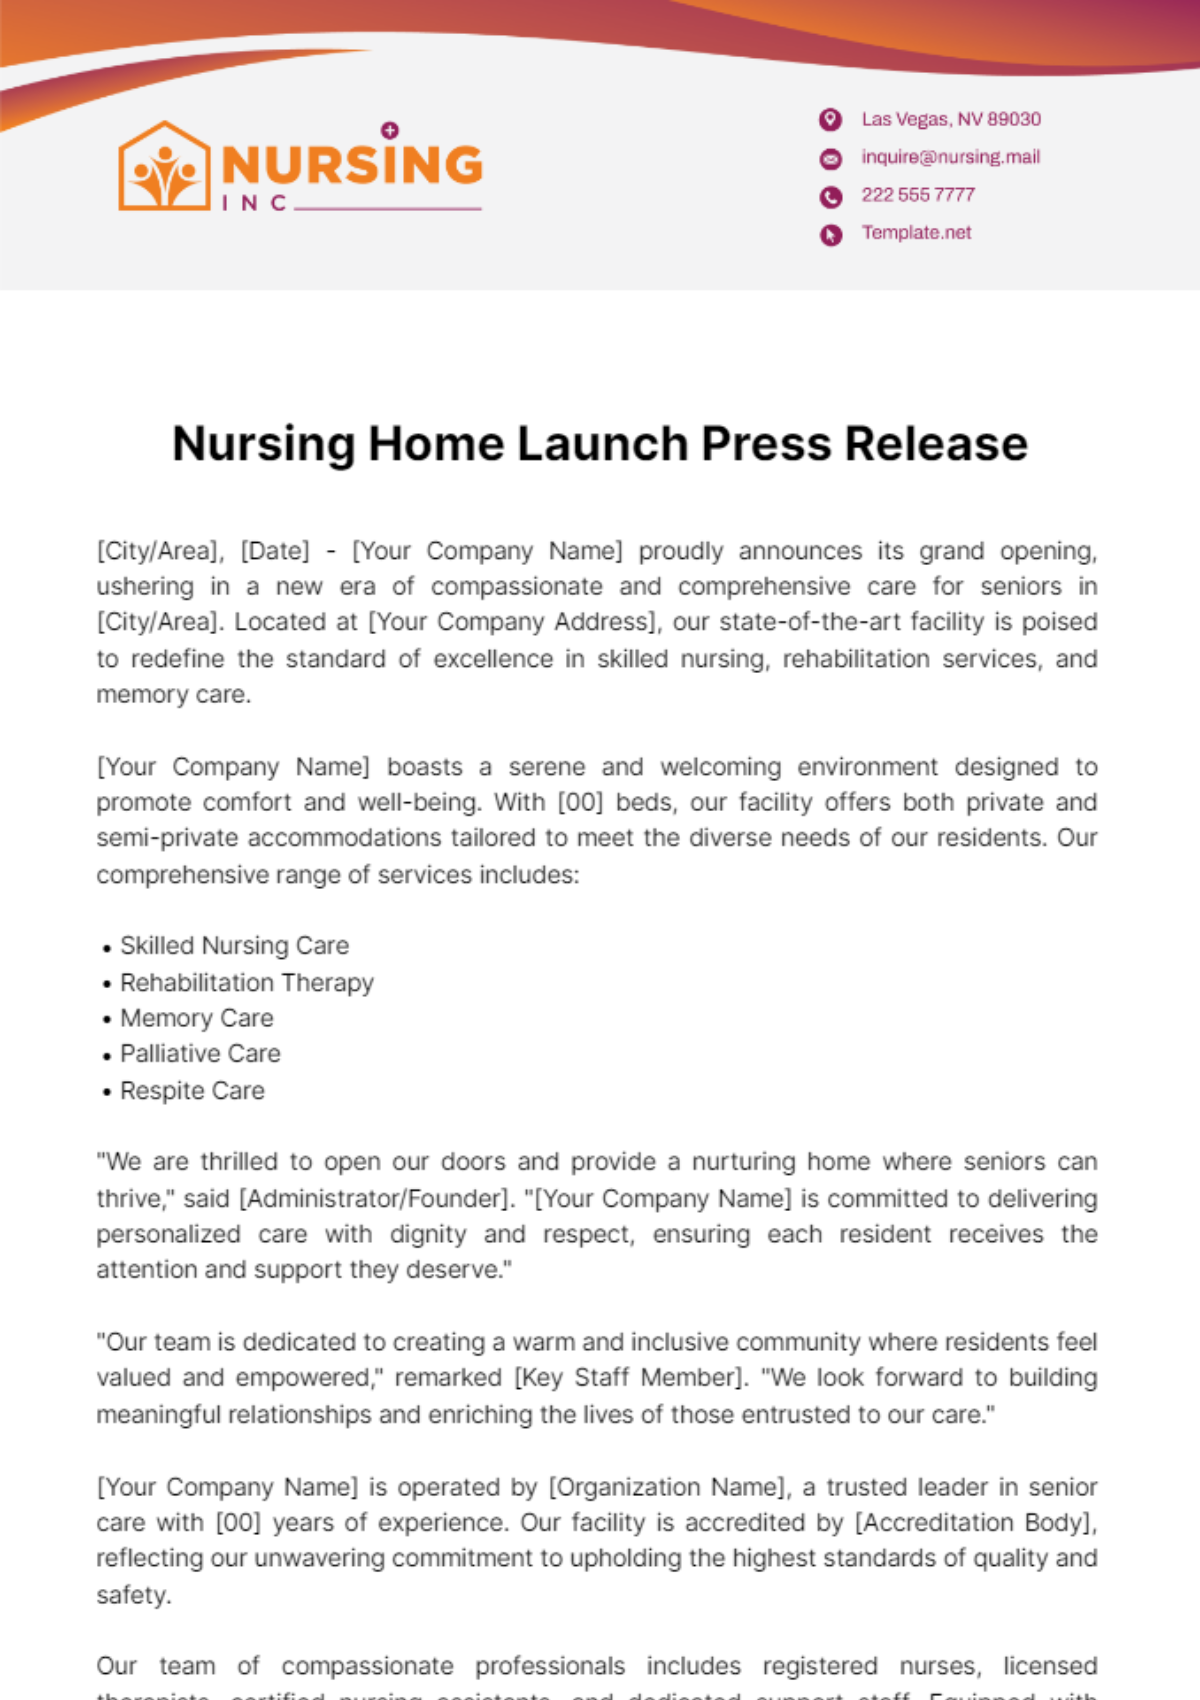 Nursing Home Launch Press Release Template